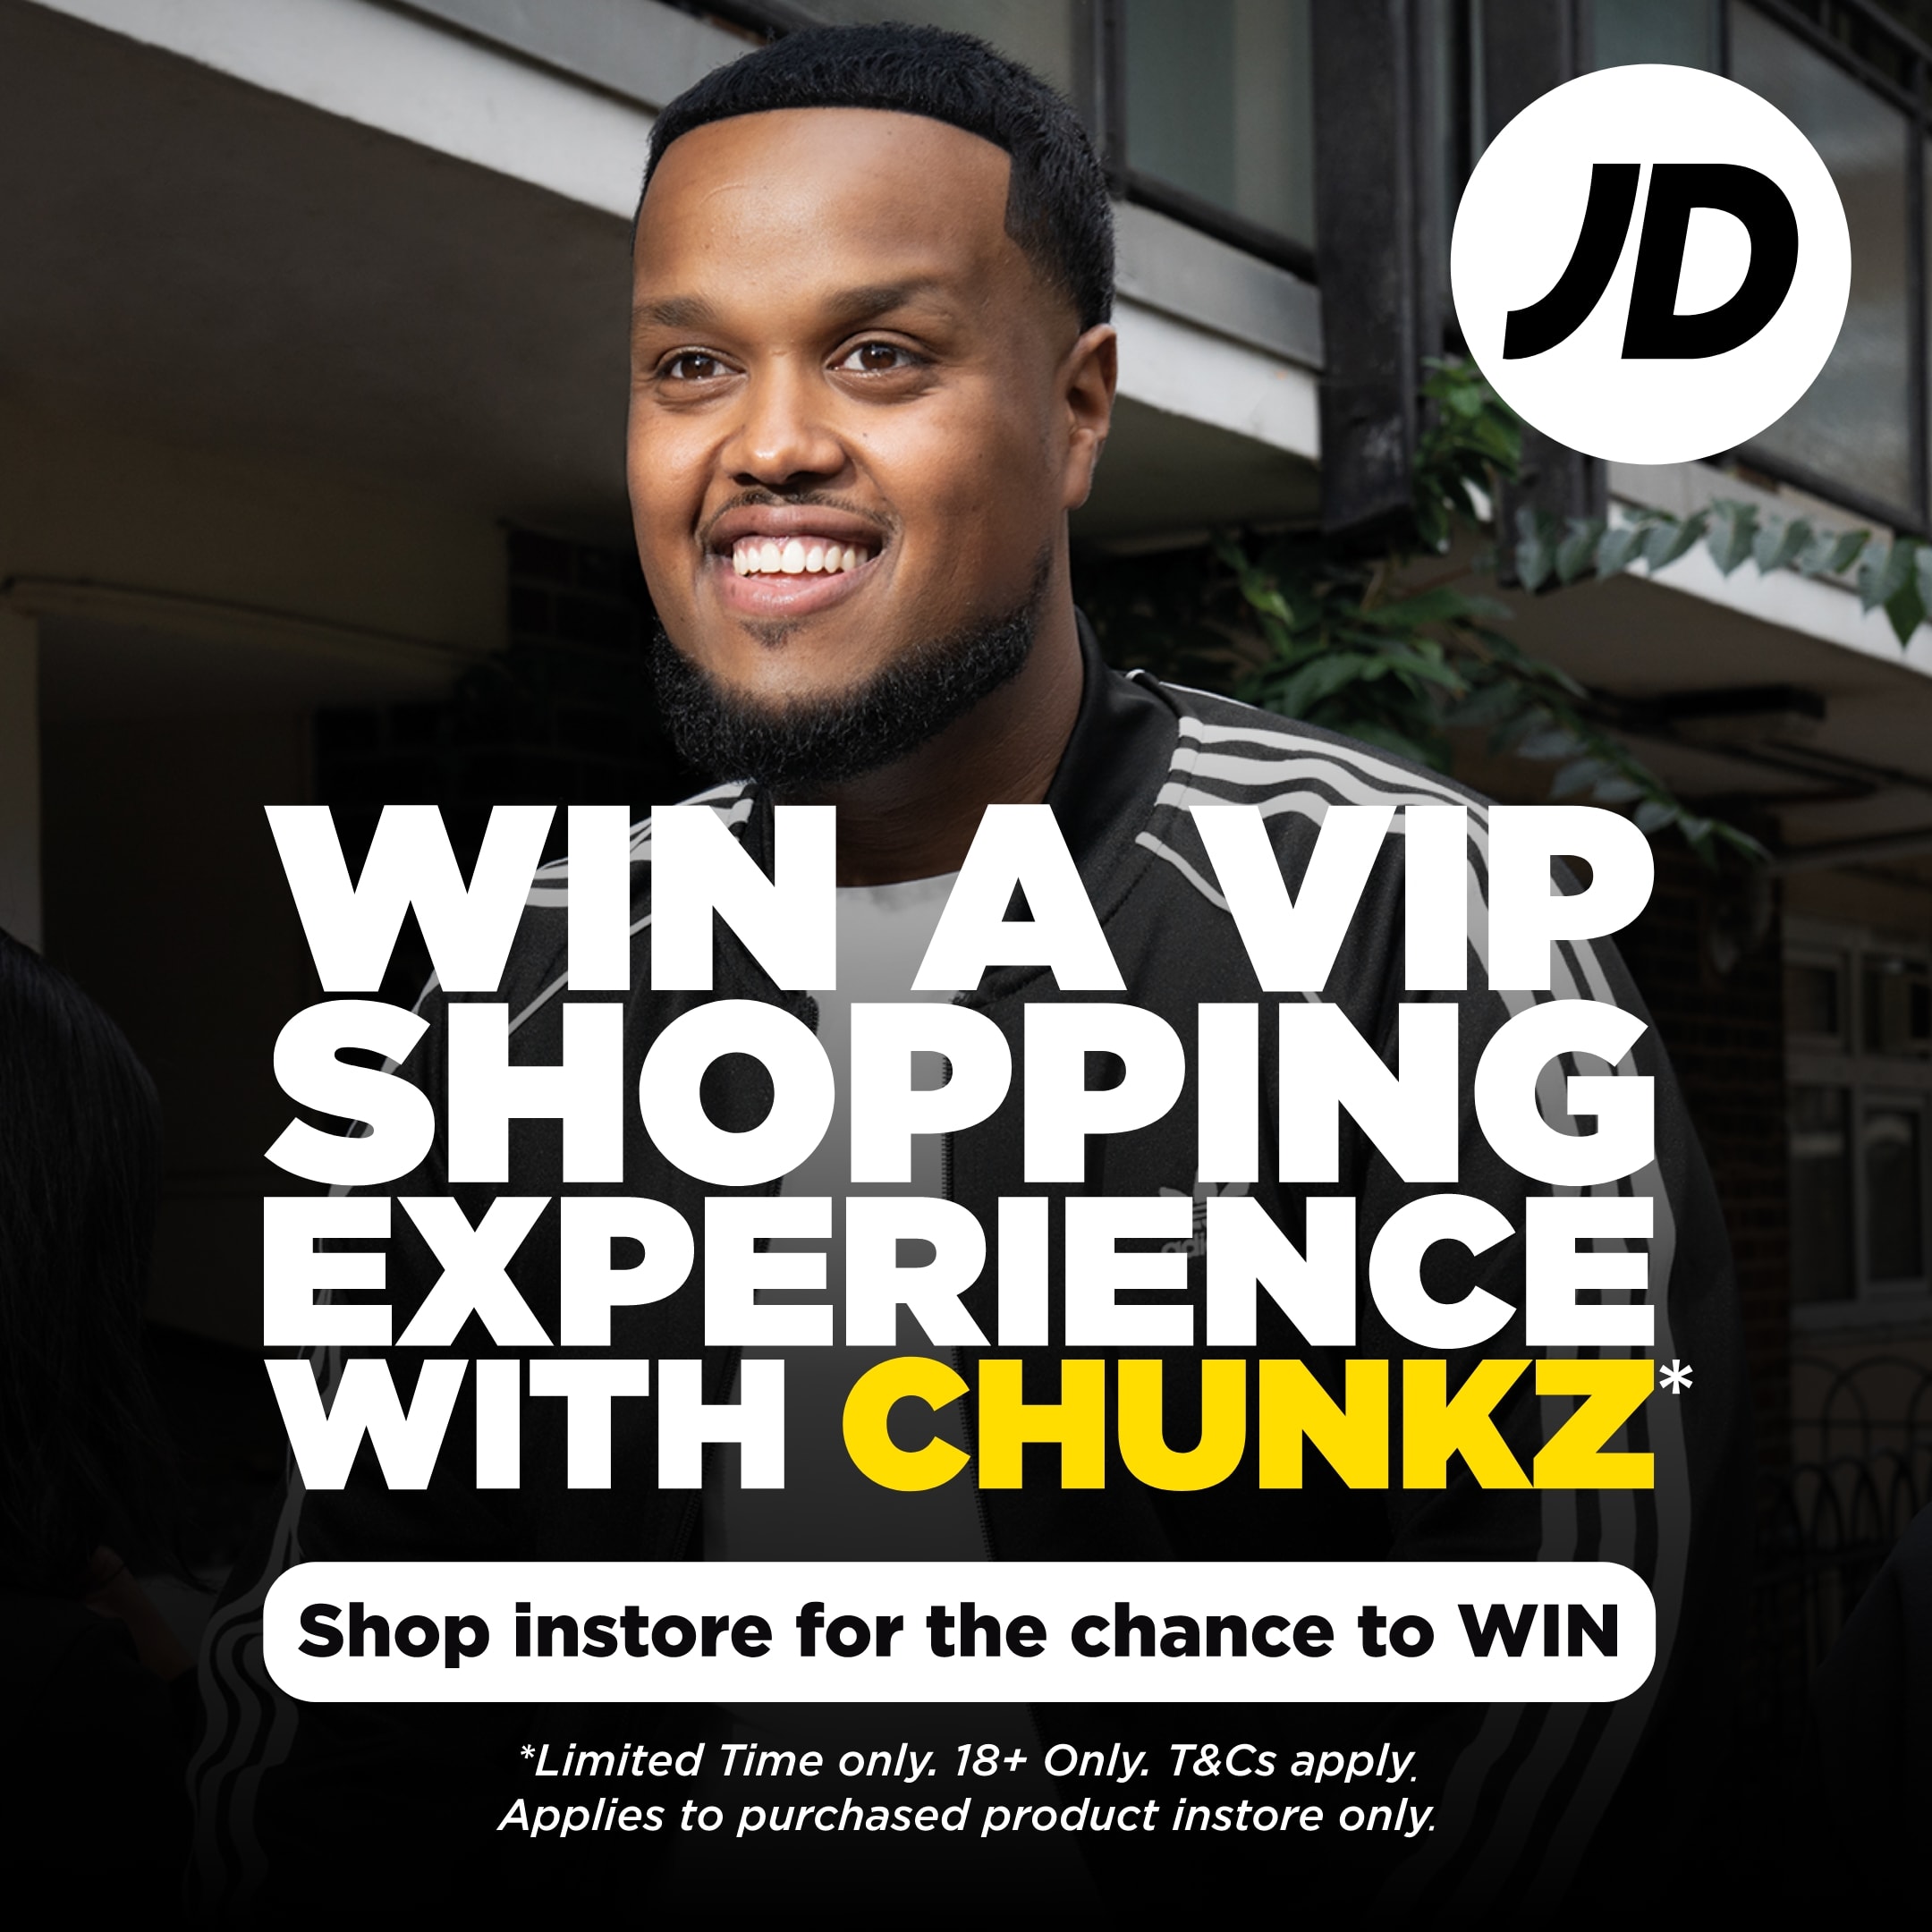 Win a VIP Shopping Experience with Chunkz! | Silverburn Shopping Centre